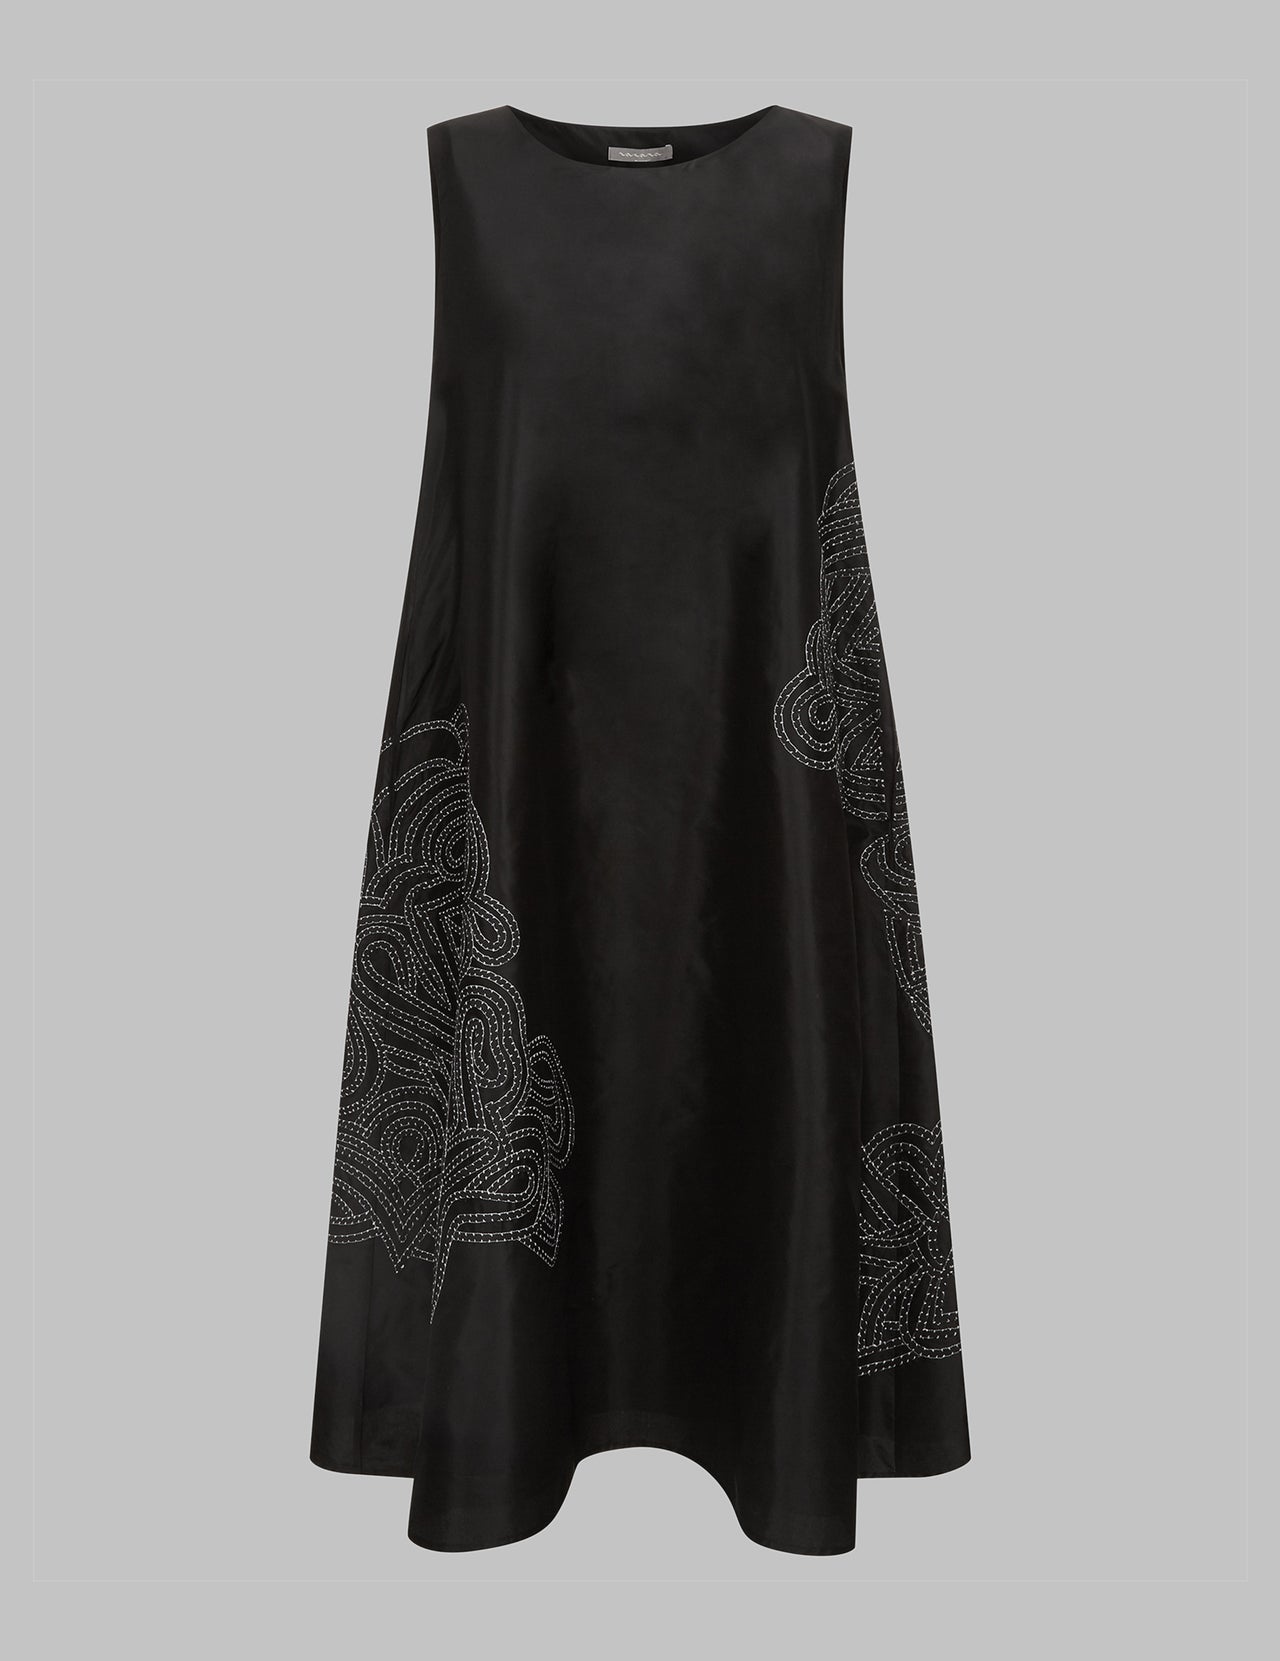  Black Silk Taffeta Joy Dress 